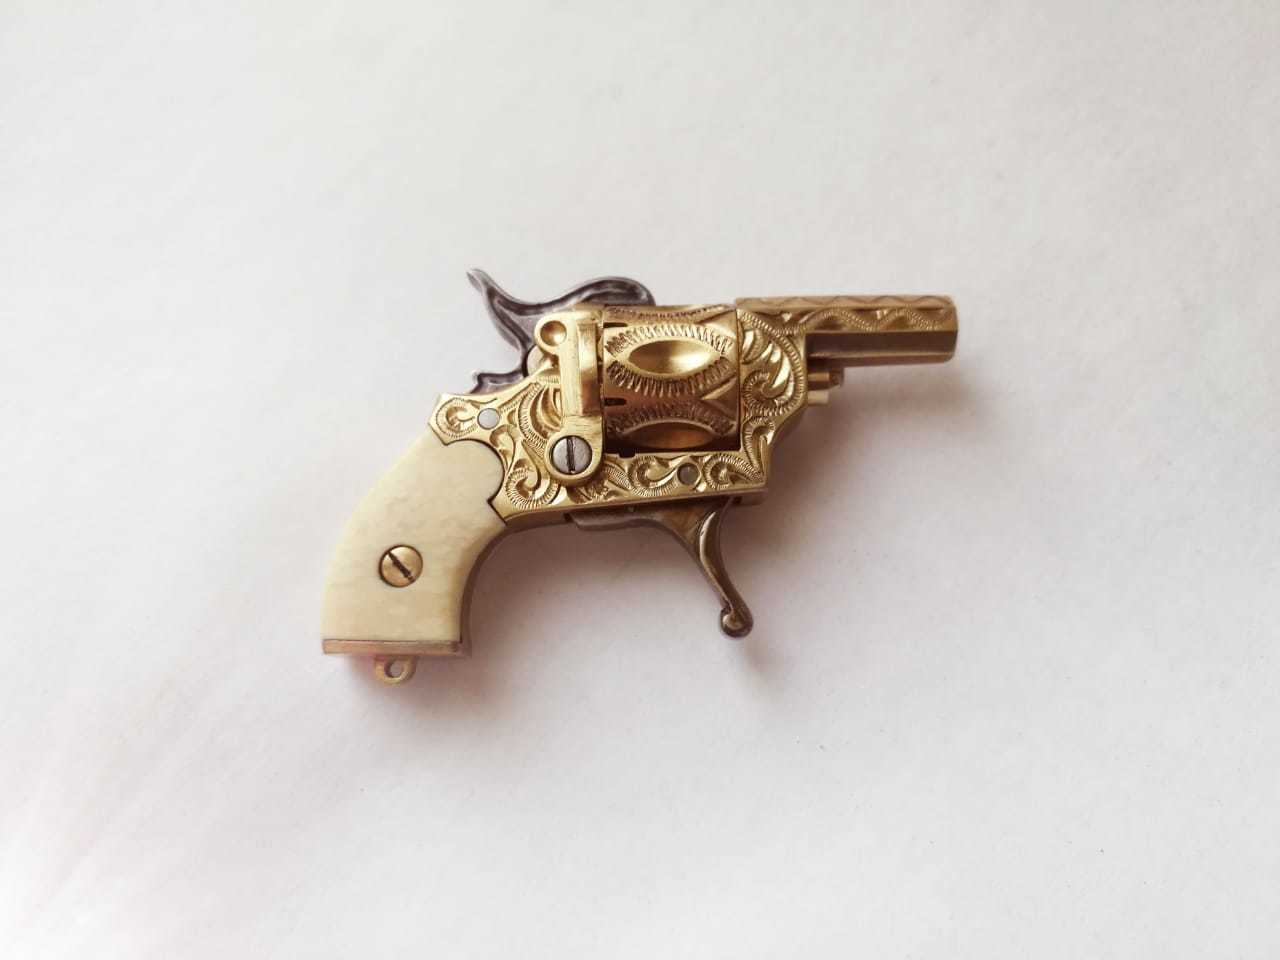 2mm Franz Pfanll revolver